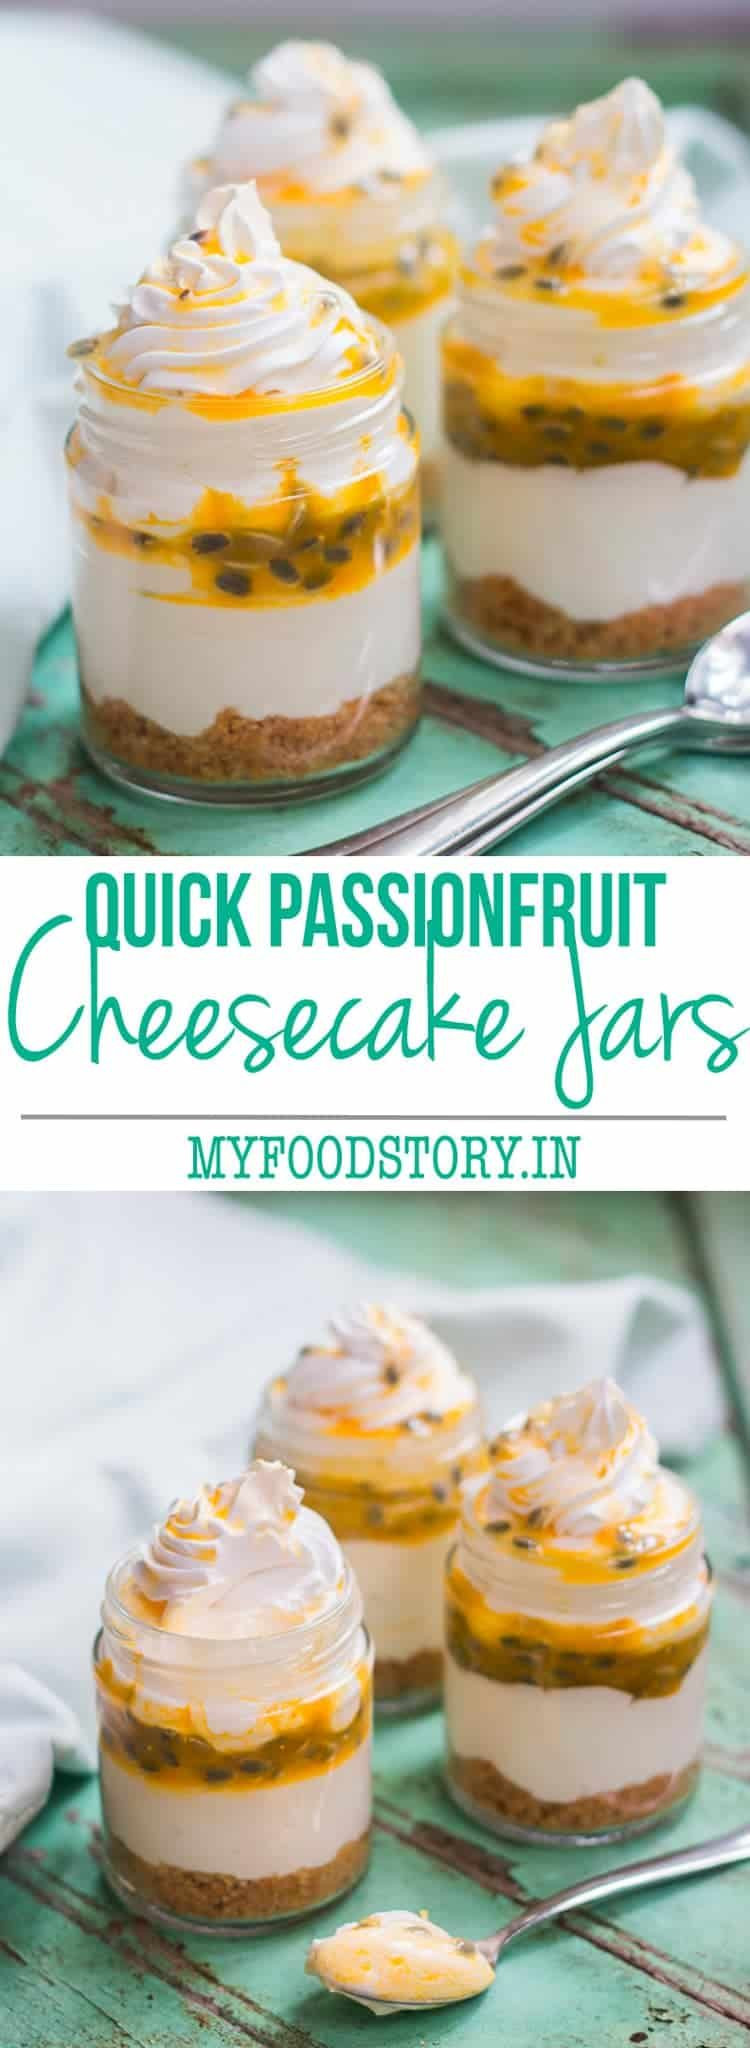 Passion Fruit Desserts Recipes
 8 ingre nt Passion Fruit Cheesecake Jars